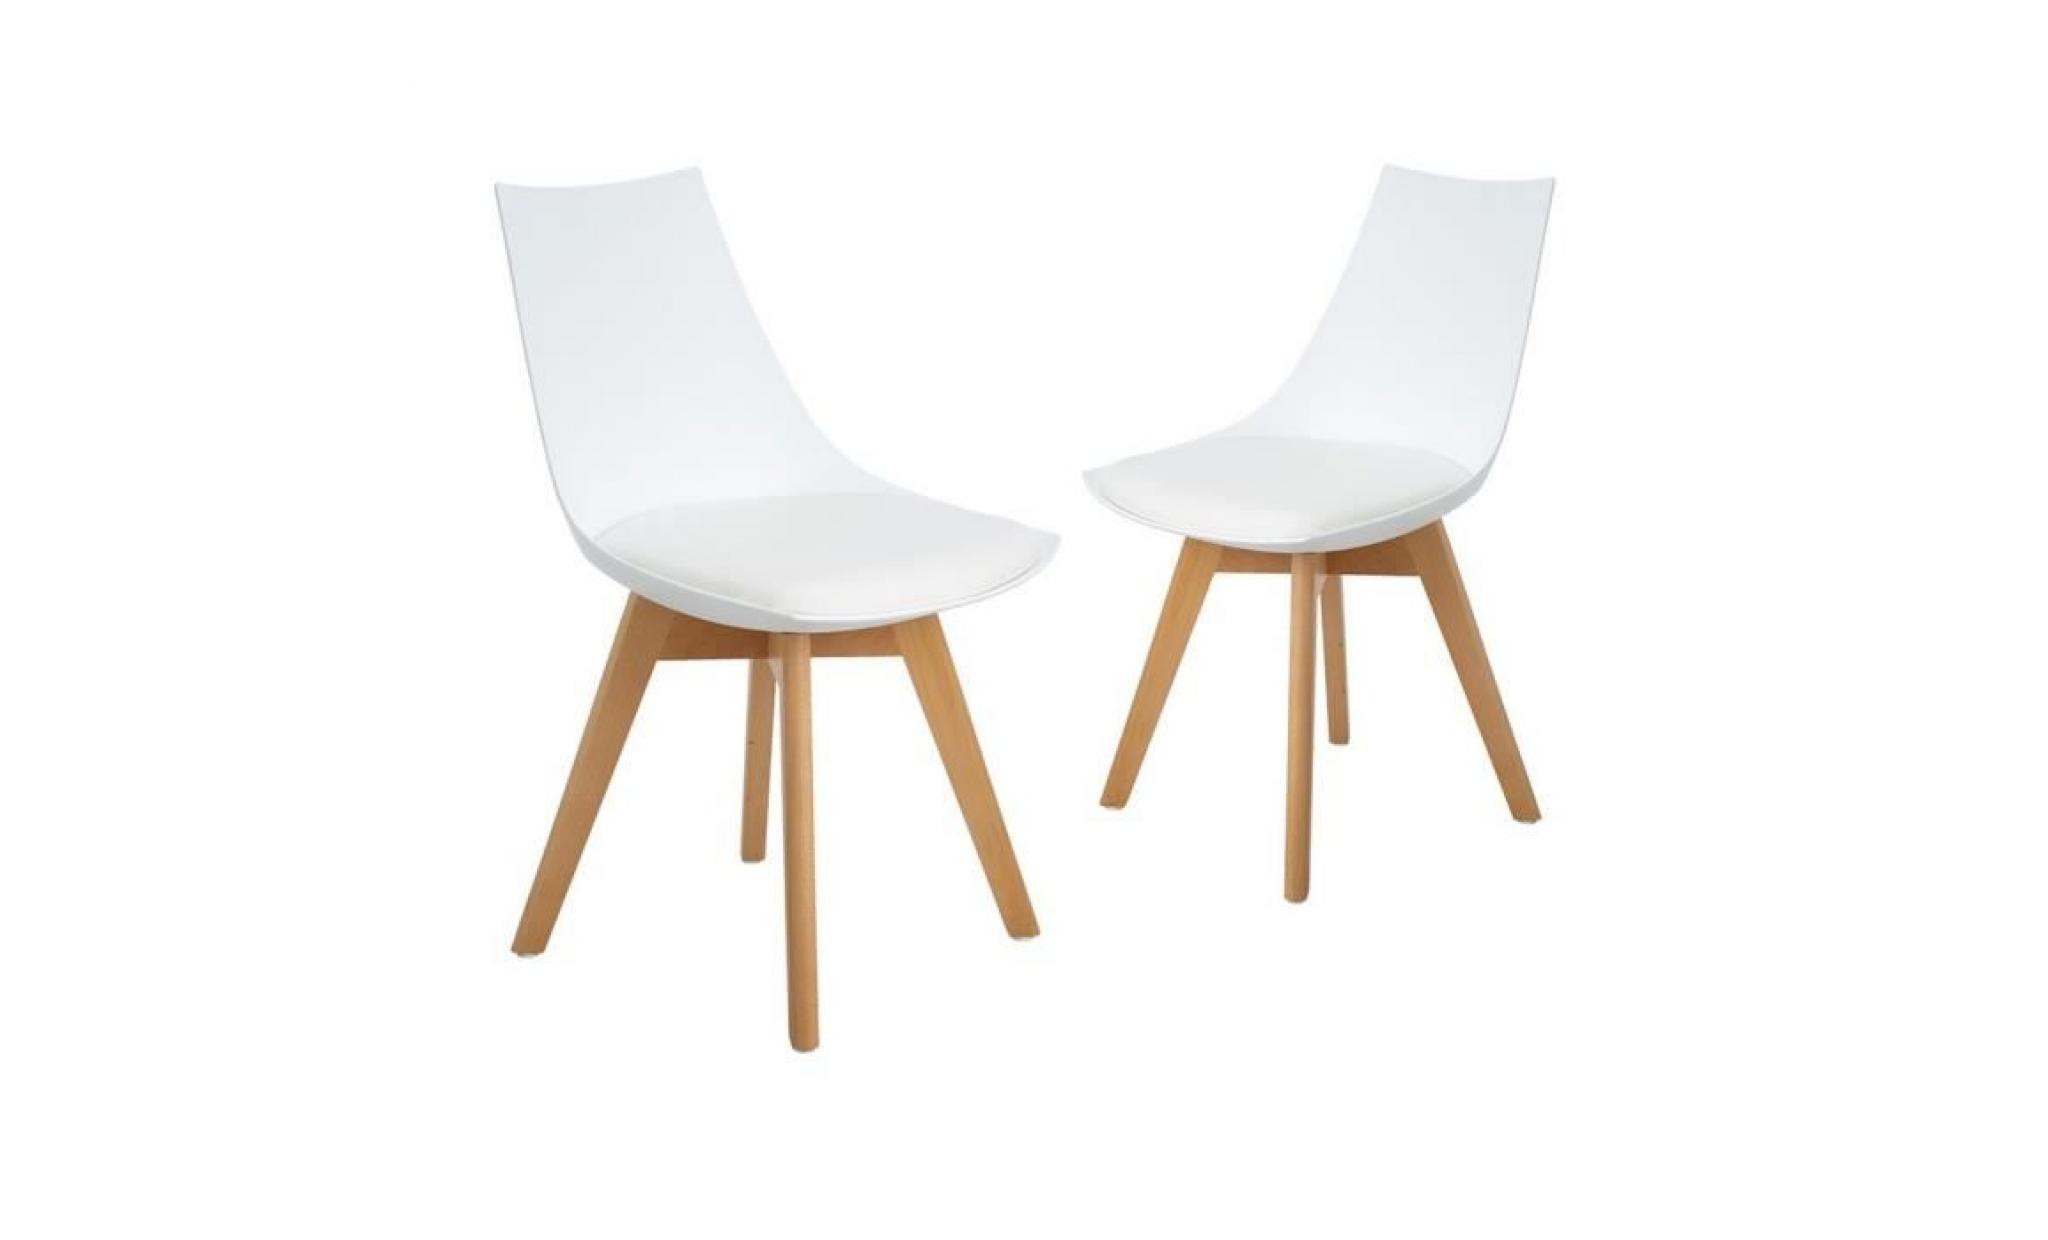 2 chaises salle à manger design scandinave blanches